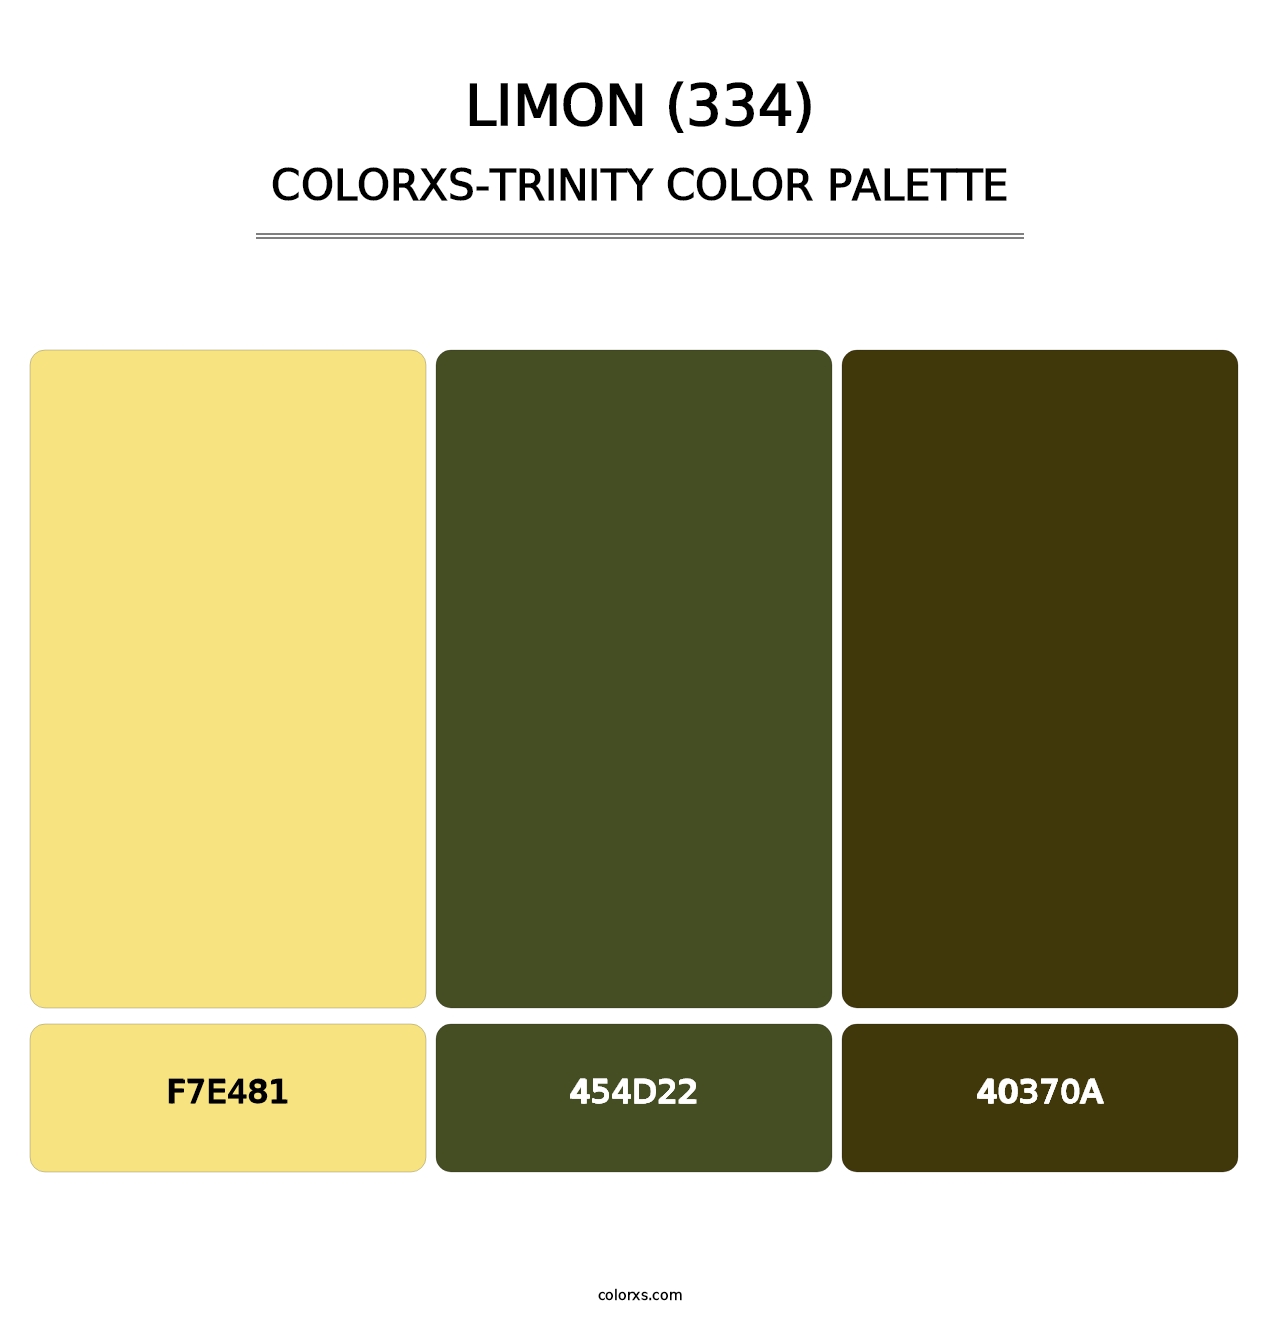 Limon (334) - Colorxs Trinity Palette